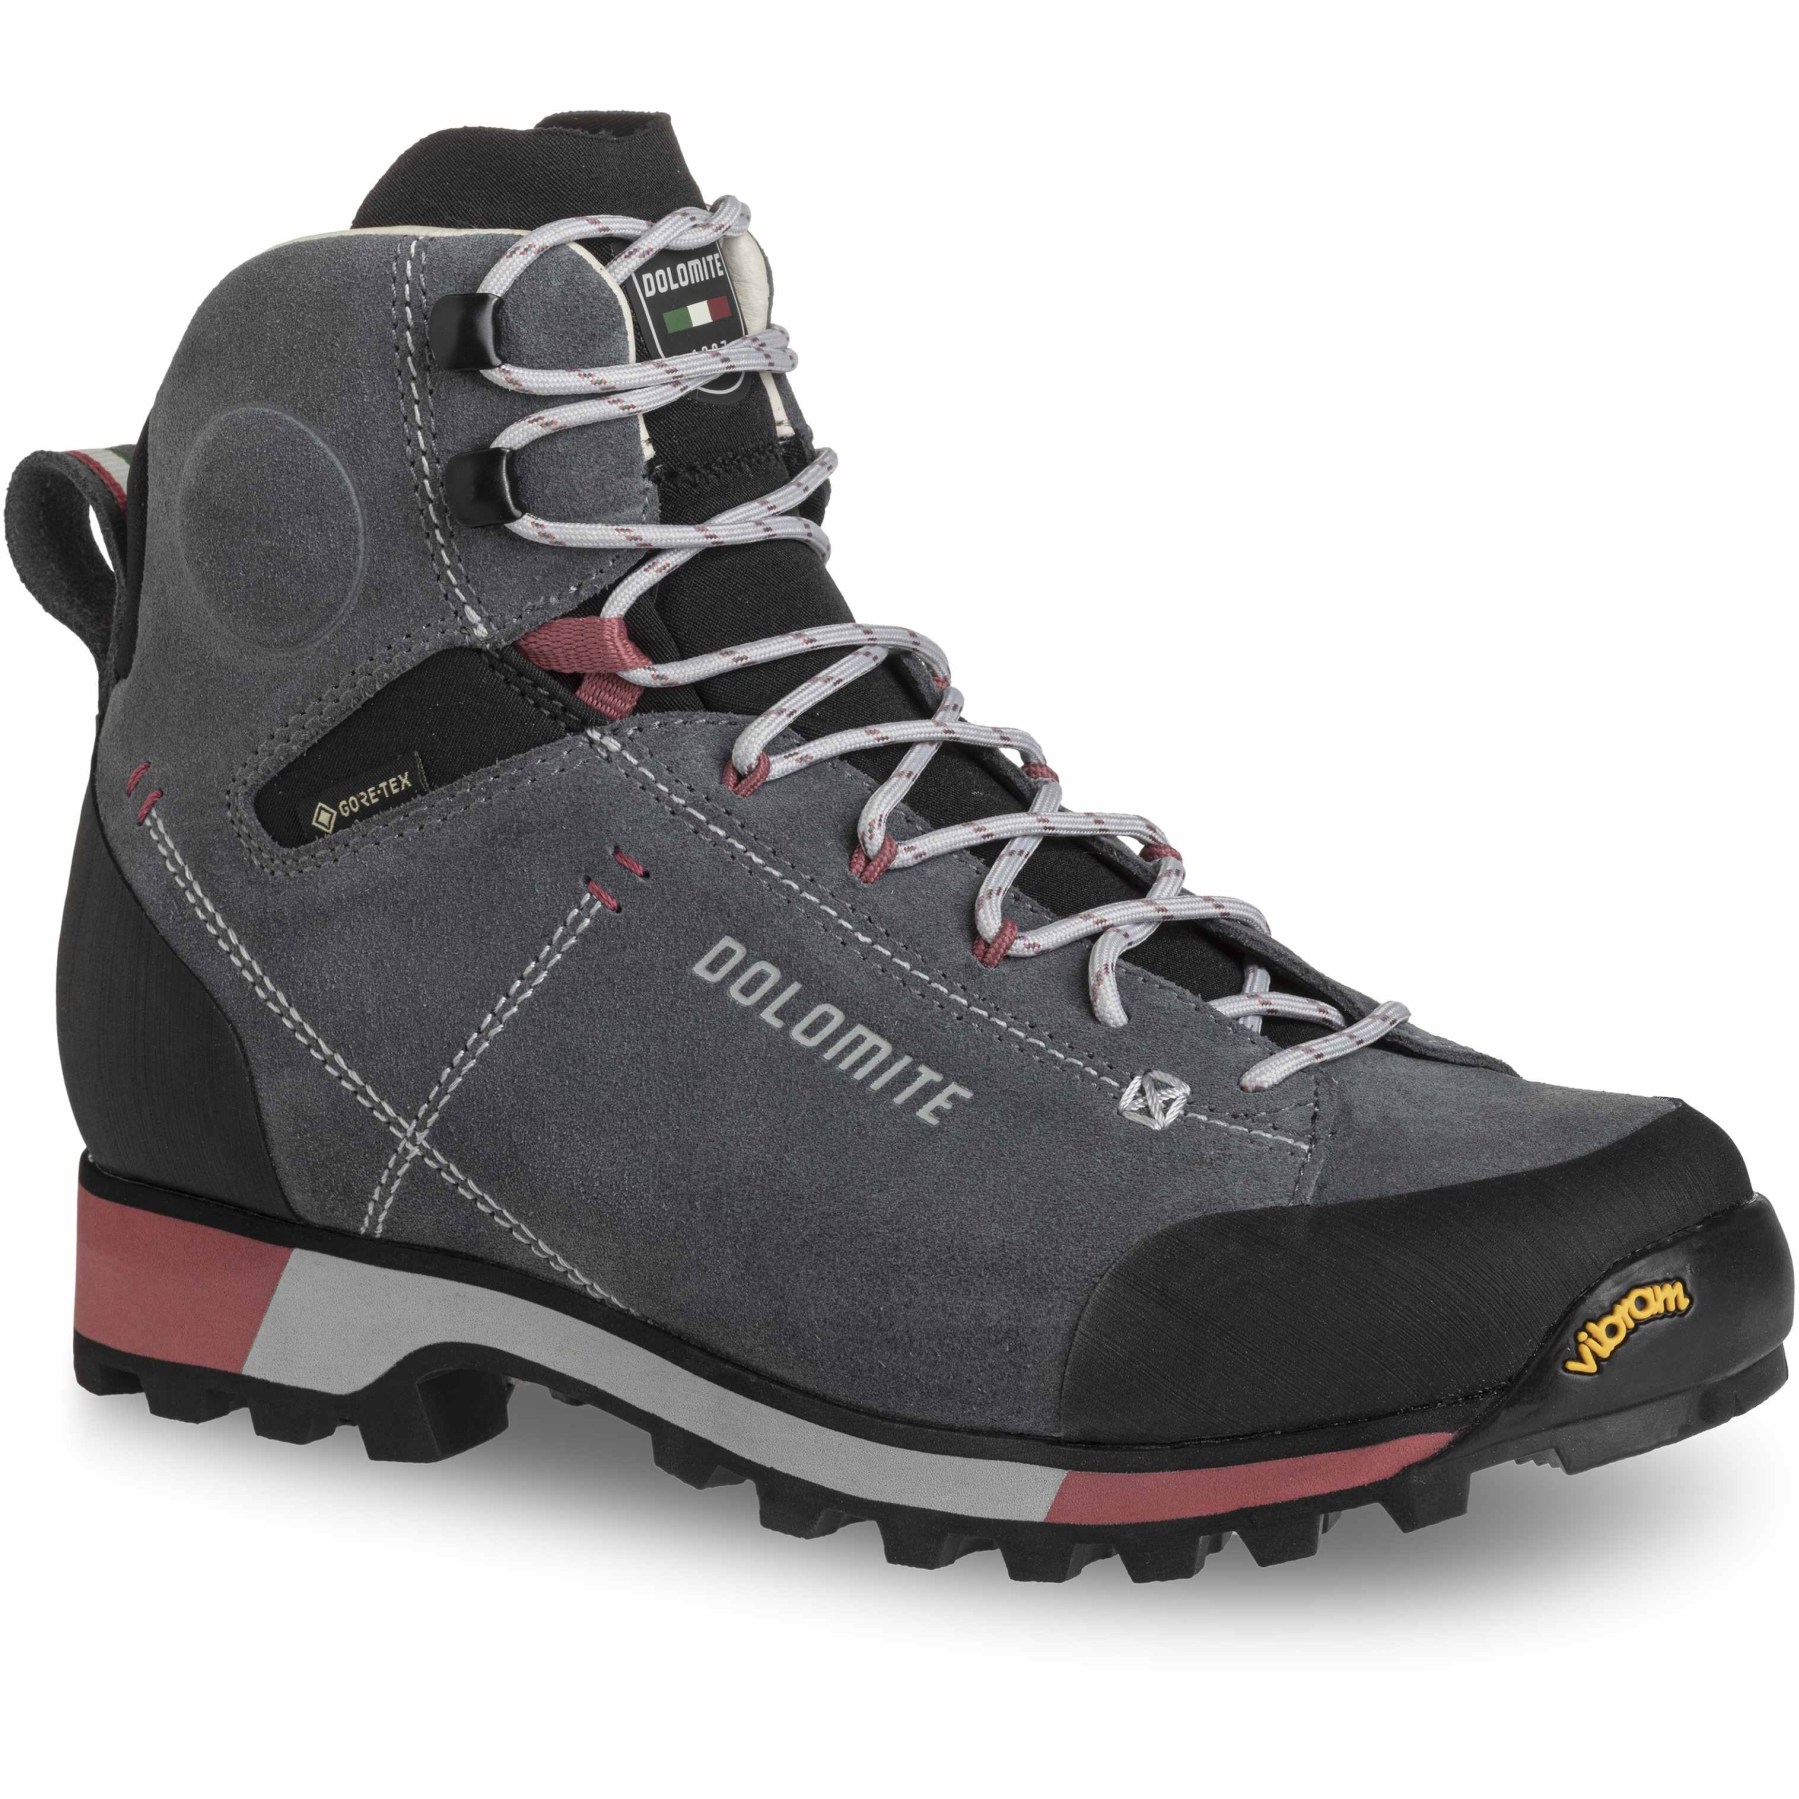 Productfoto van Dolomite 54 Hike Evo GTX Schoenen Dames - gunmetal grey